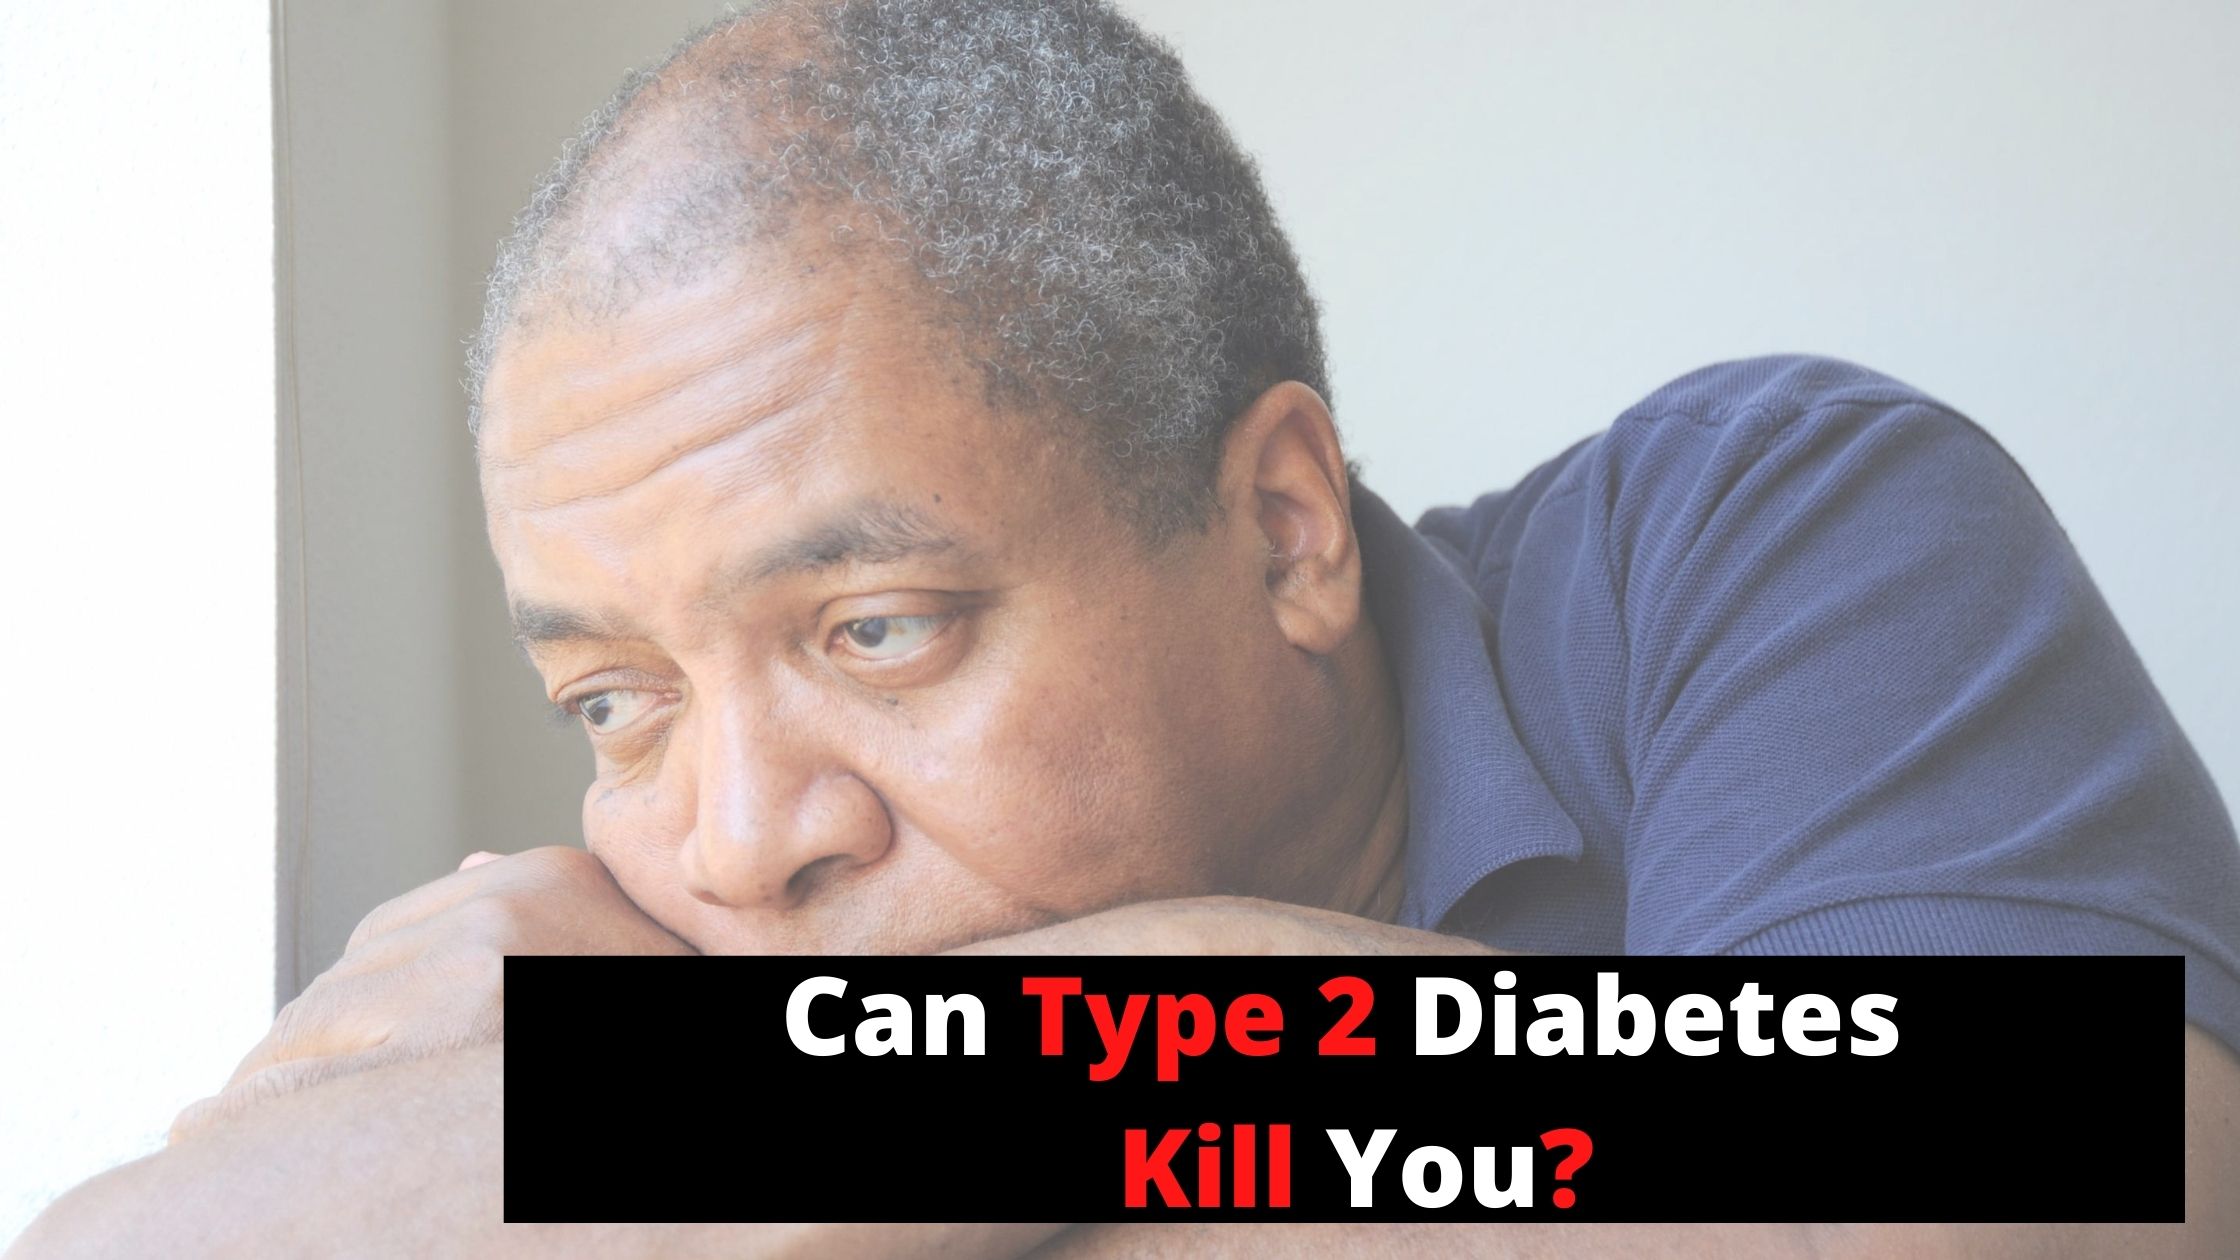 Can Type 2 Diabetes Kill You?